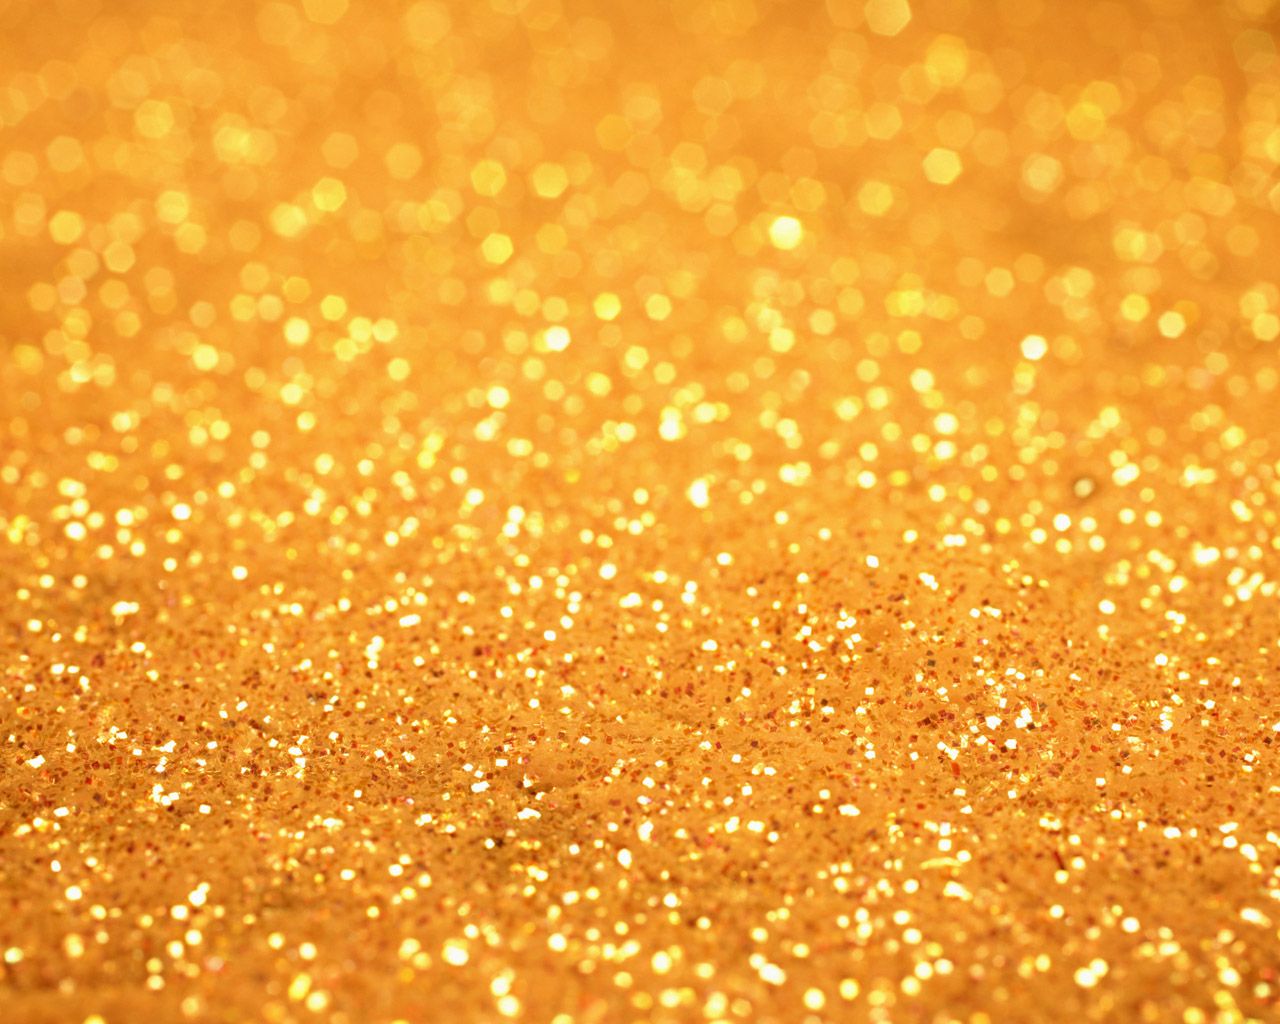 Gold sparkle background ideas. sparkles background, gold sparkle background, sparkle